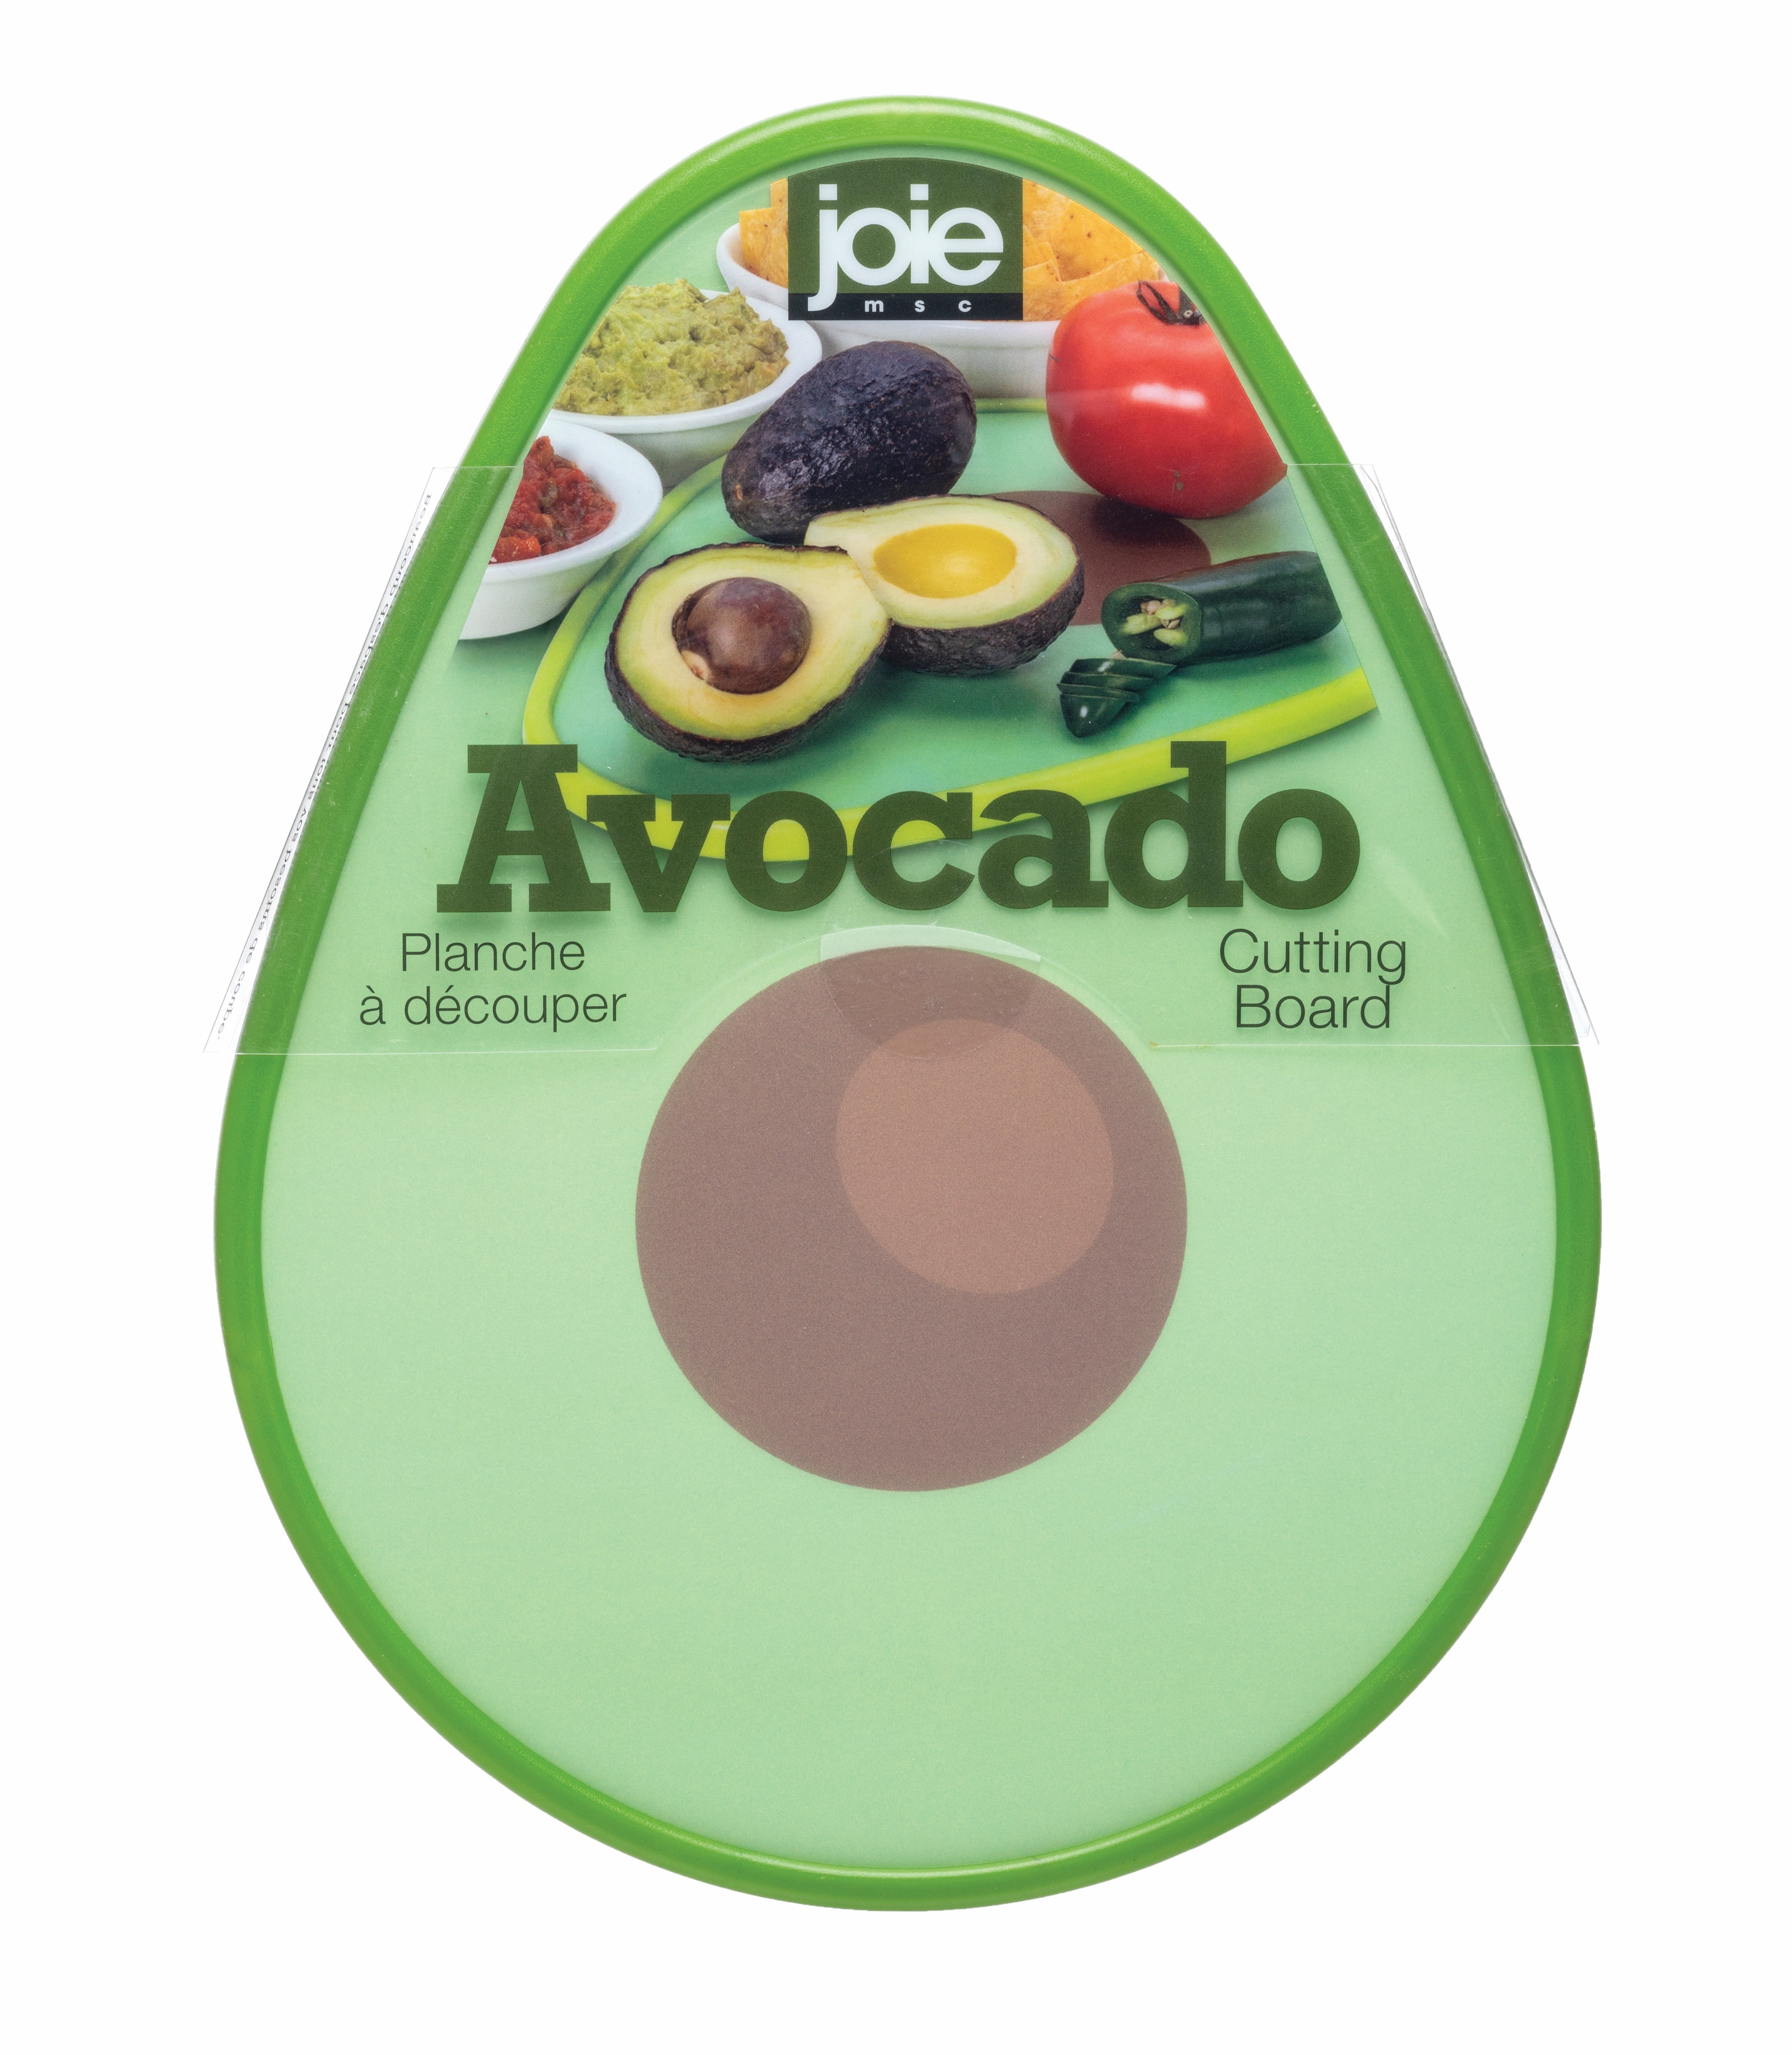 Joie NM Avocado Cutting Board 